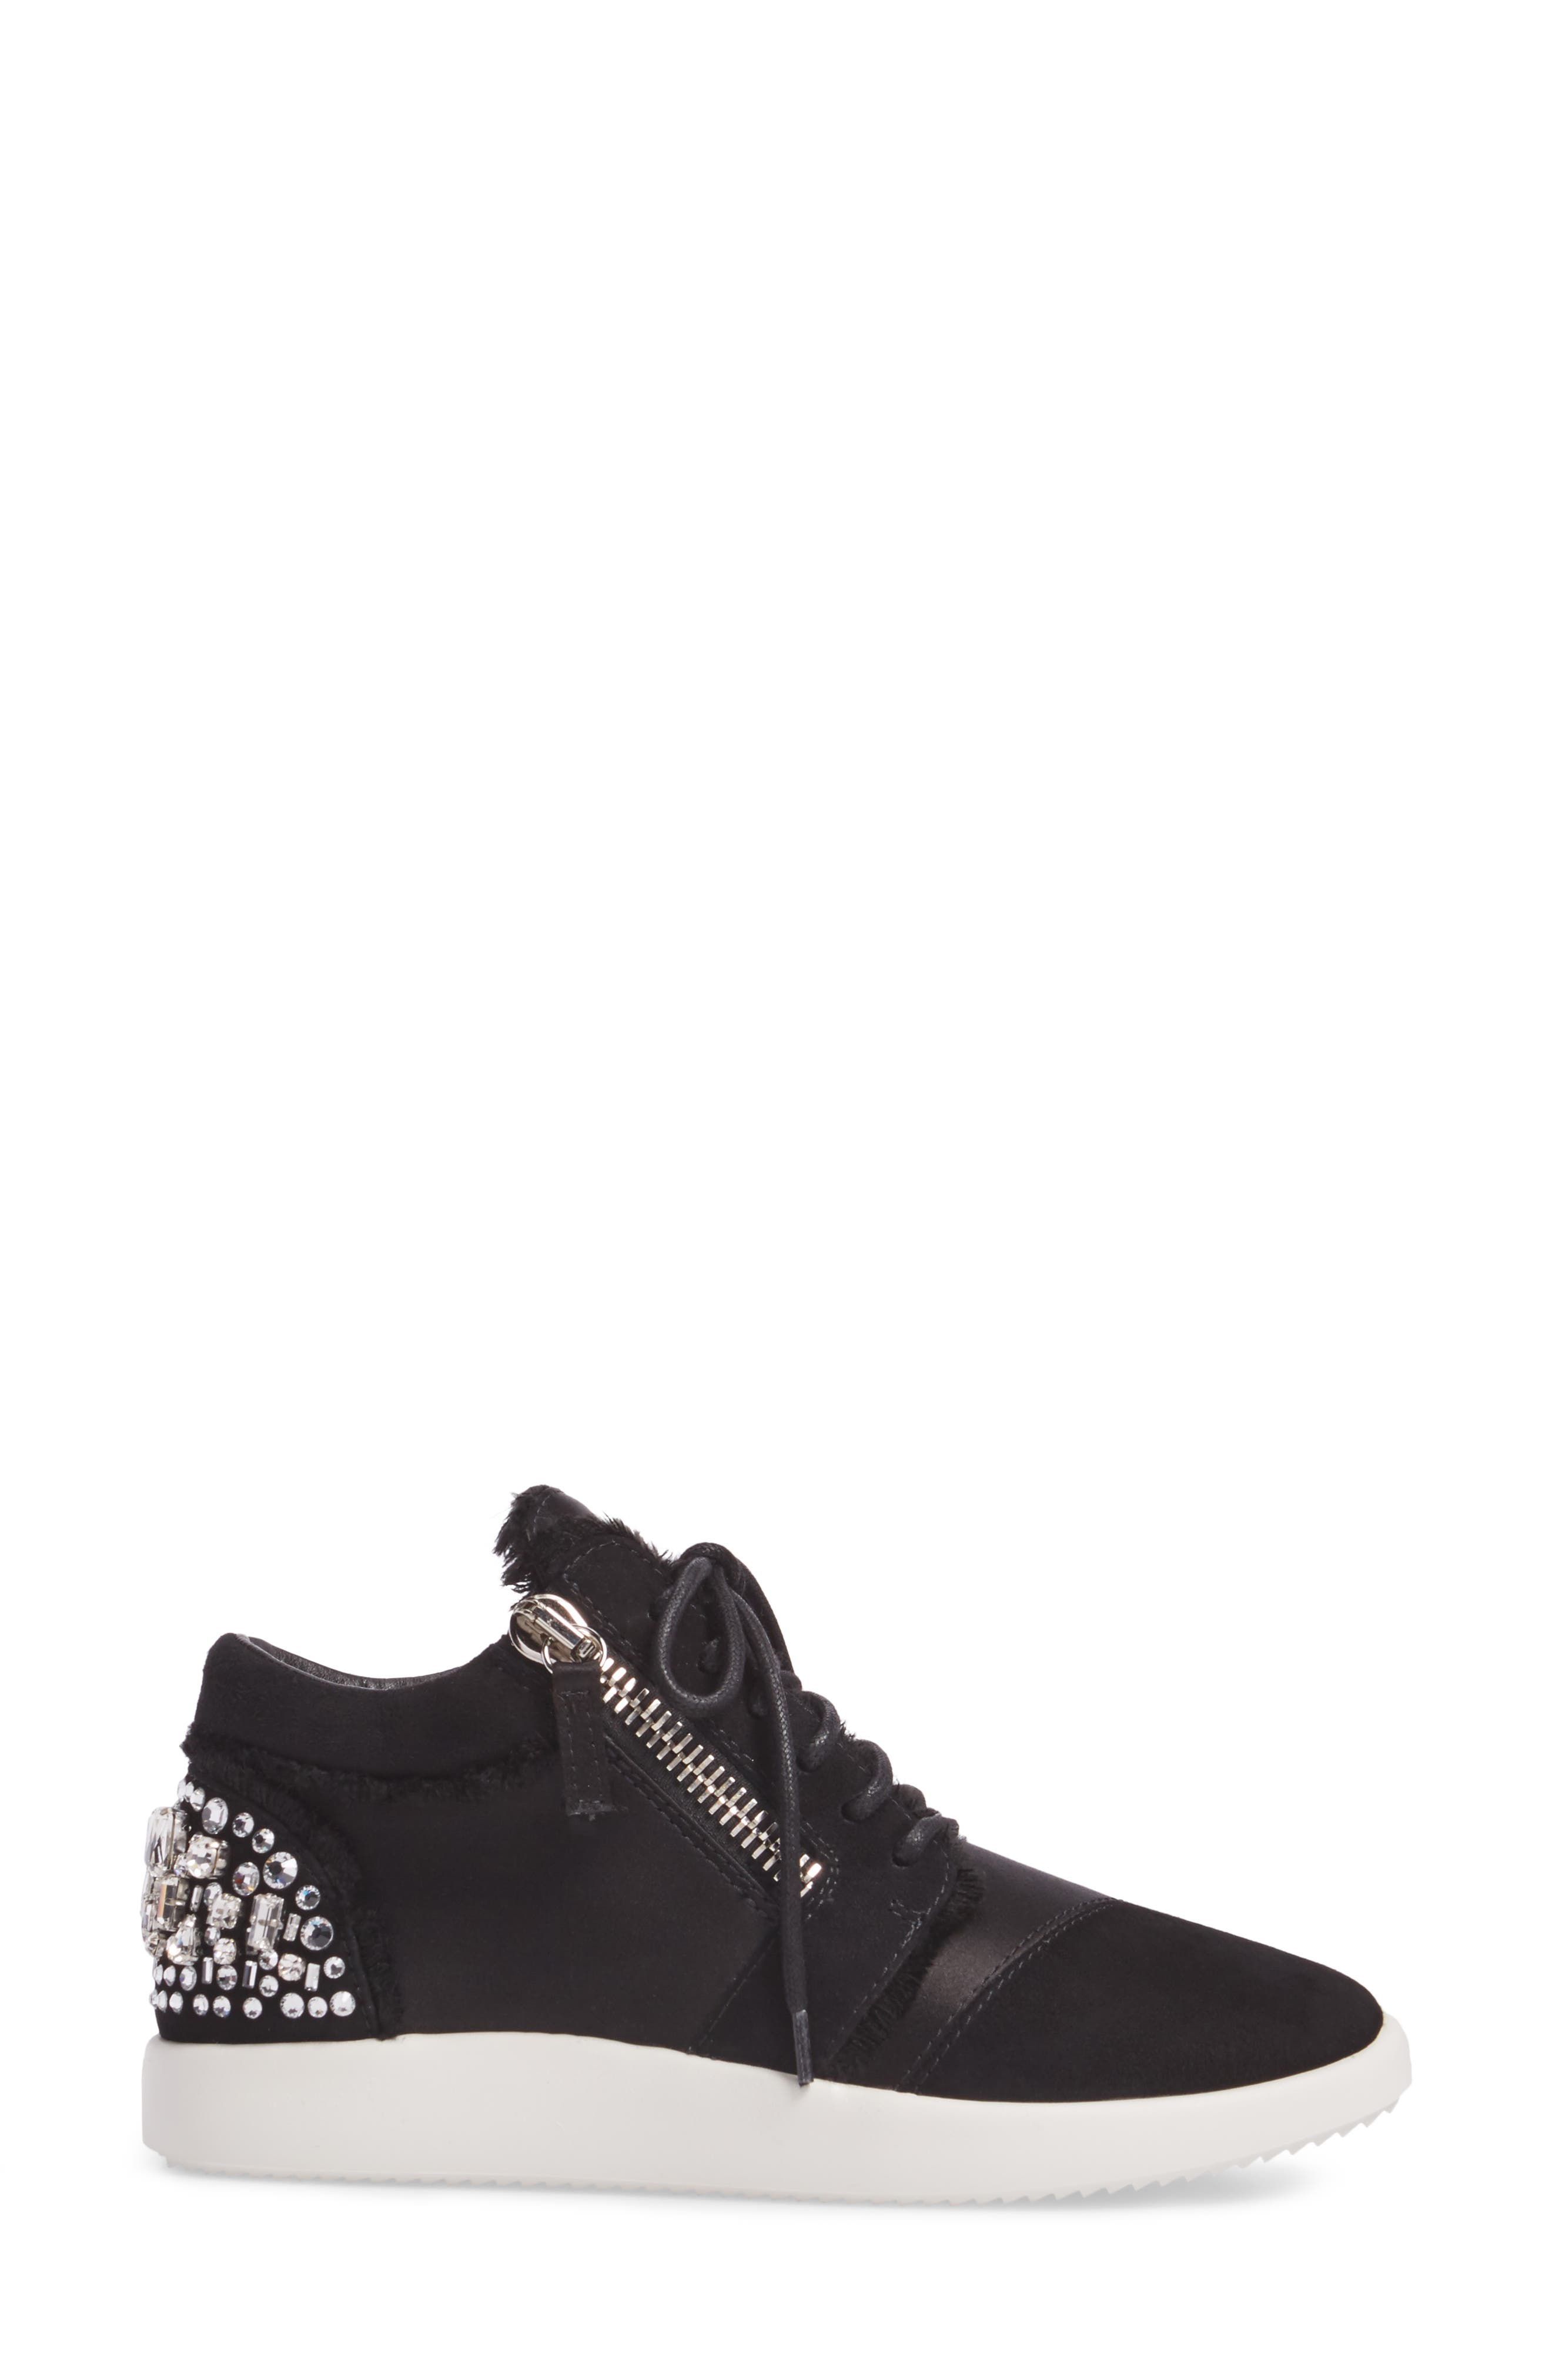 GIUSEPPE ZANOTTI Crystal-Embellished Suede & Satin Side-Zip Sneakers ...